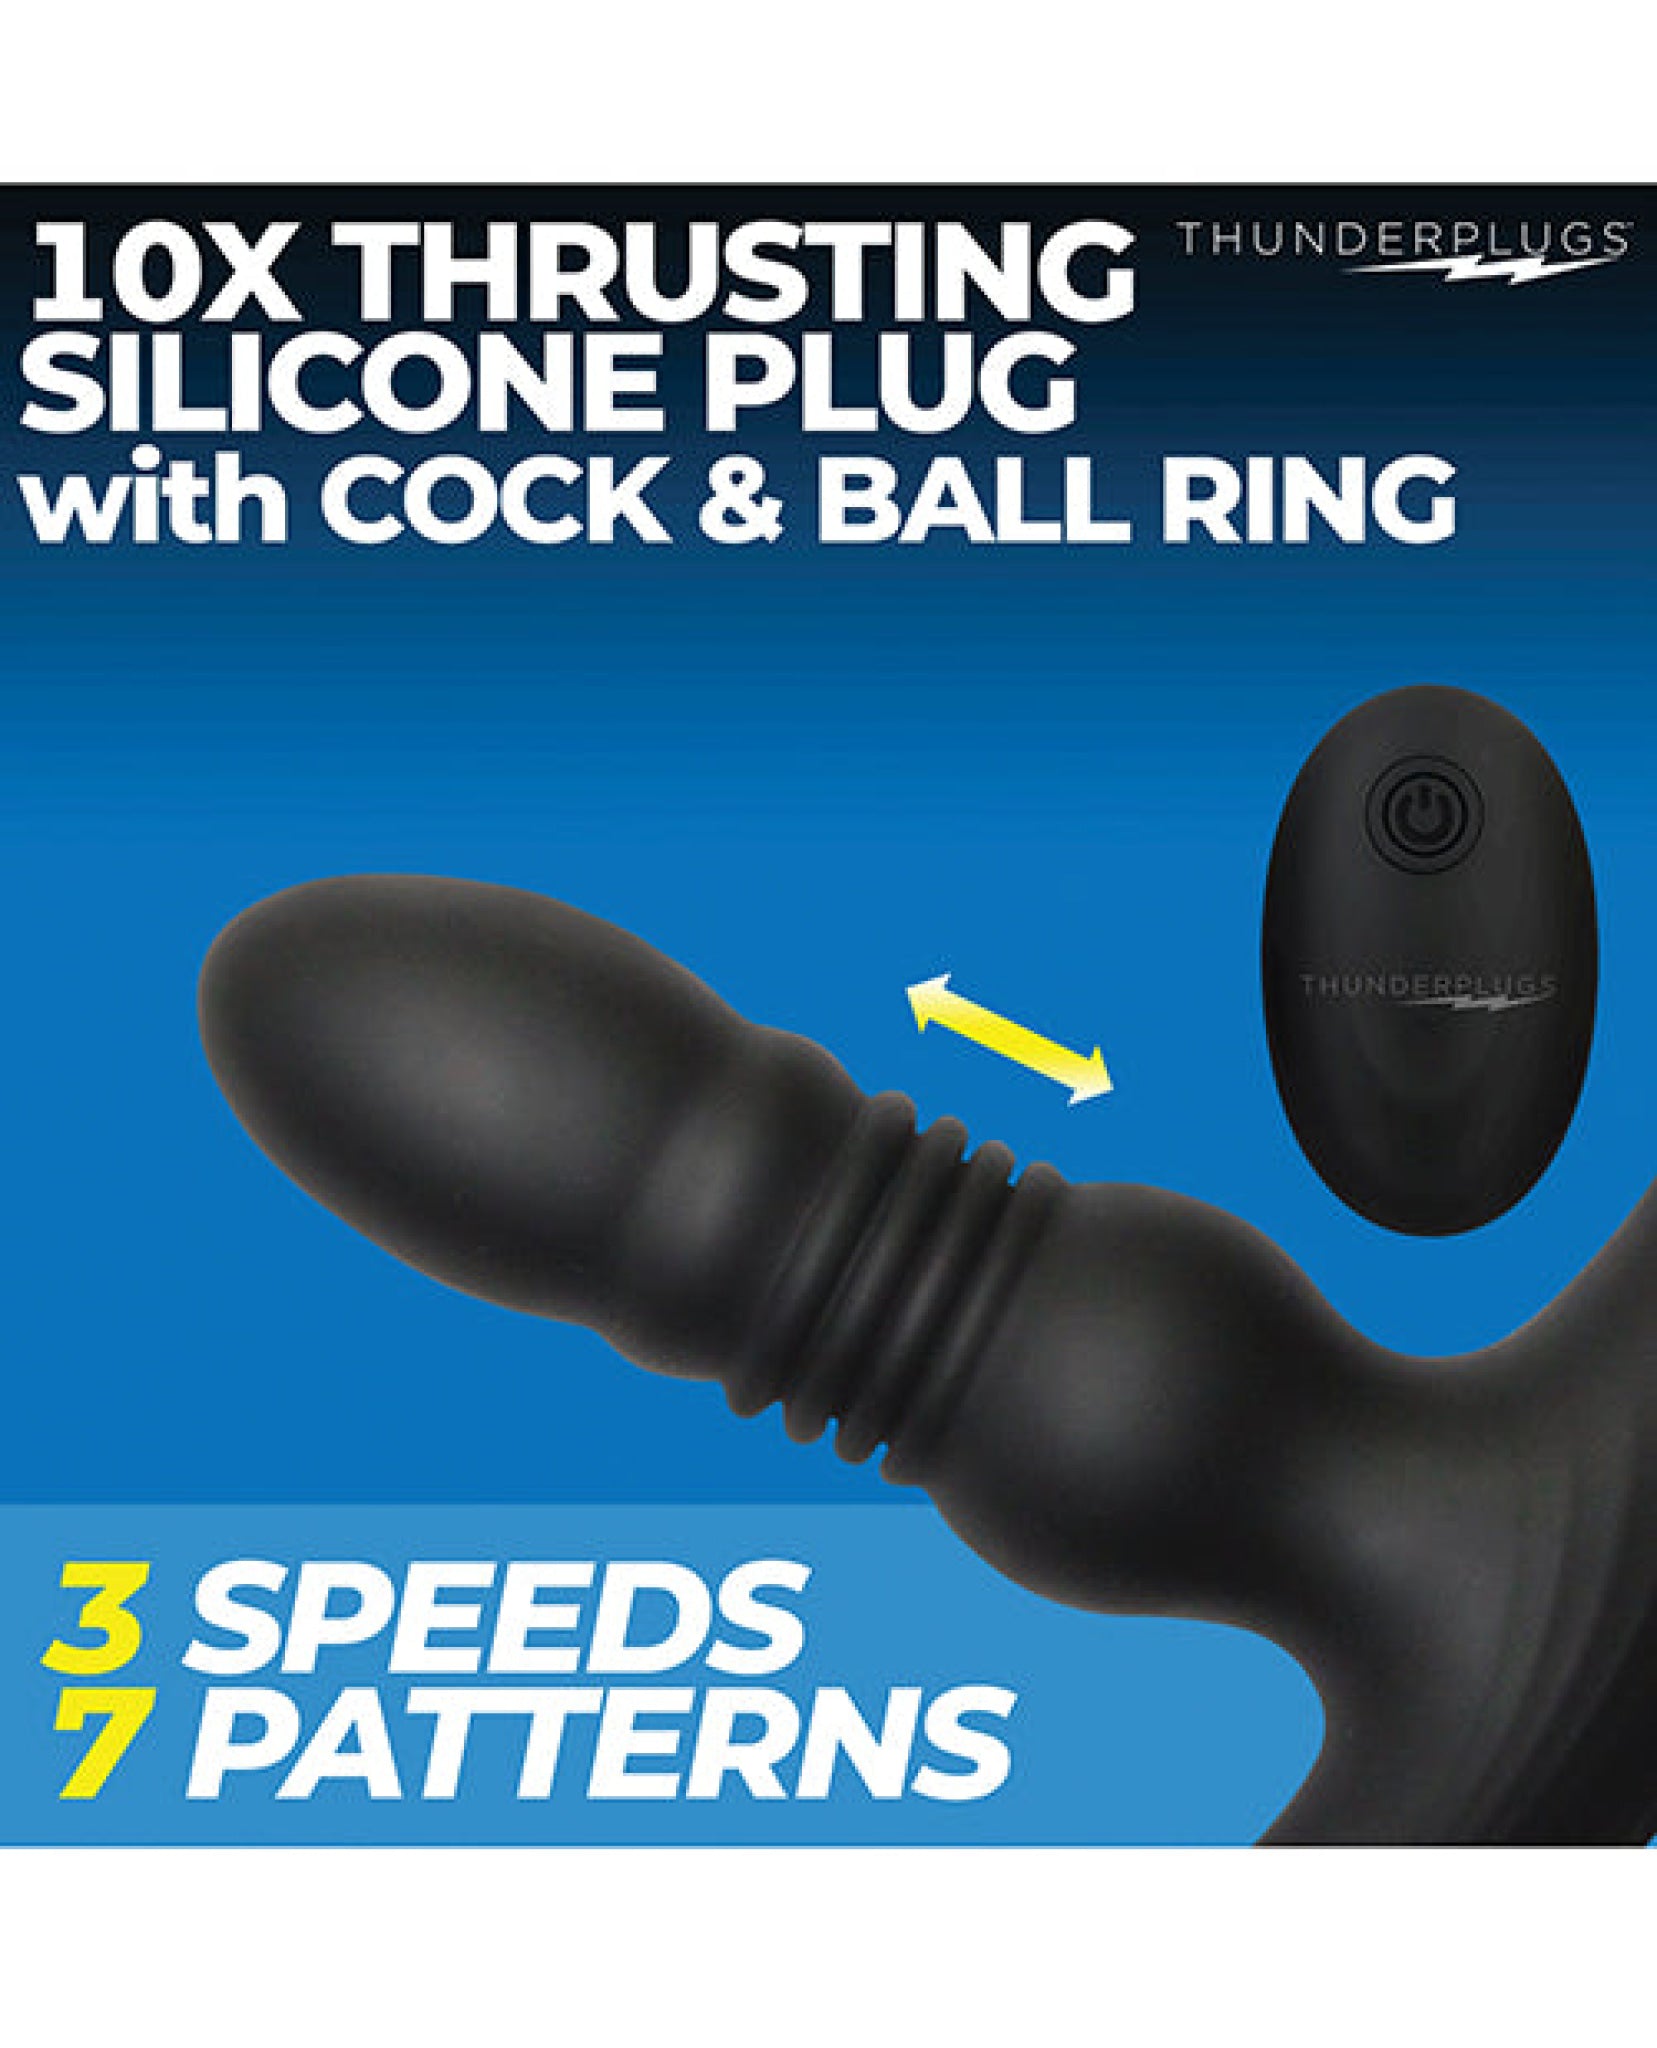 Thunderplugs 10x Thrusting Silicone Vibrator W/cock & Ball Strap & Remote - Black Thunderplugs